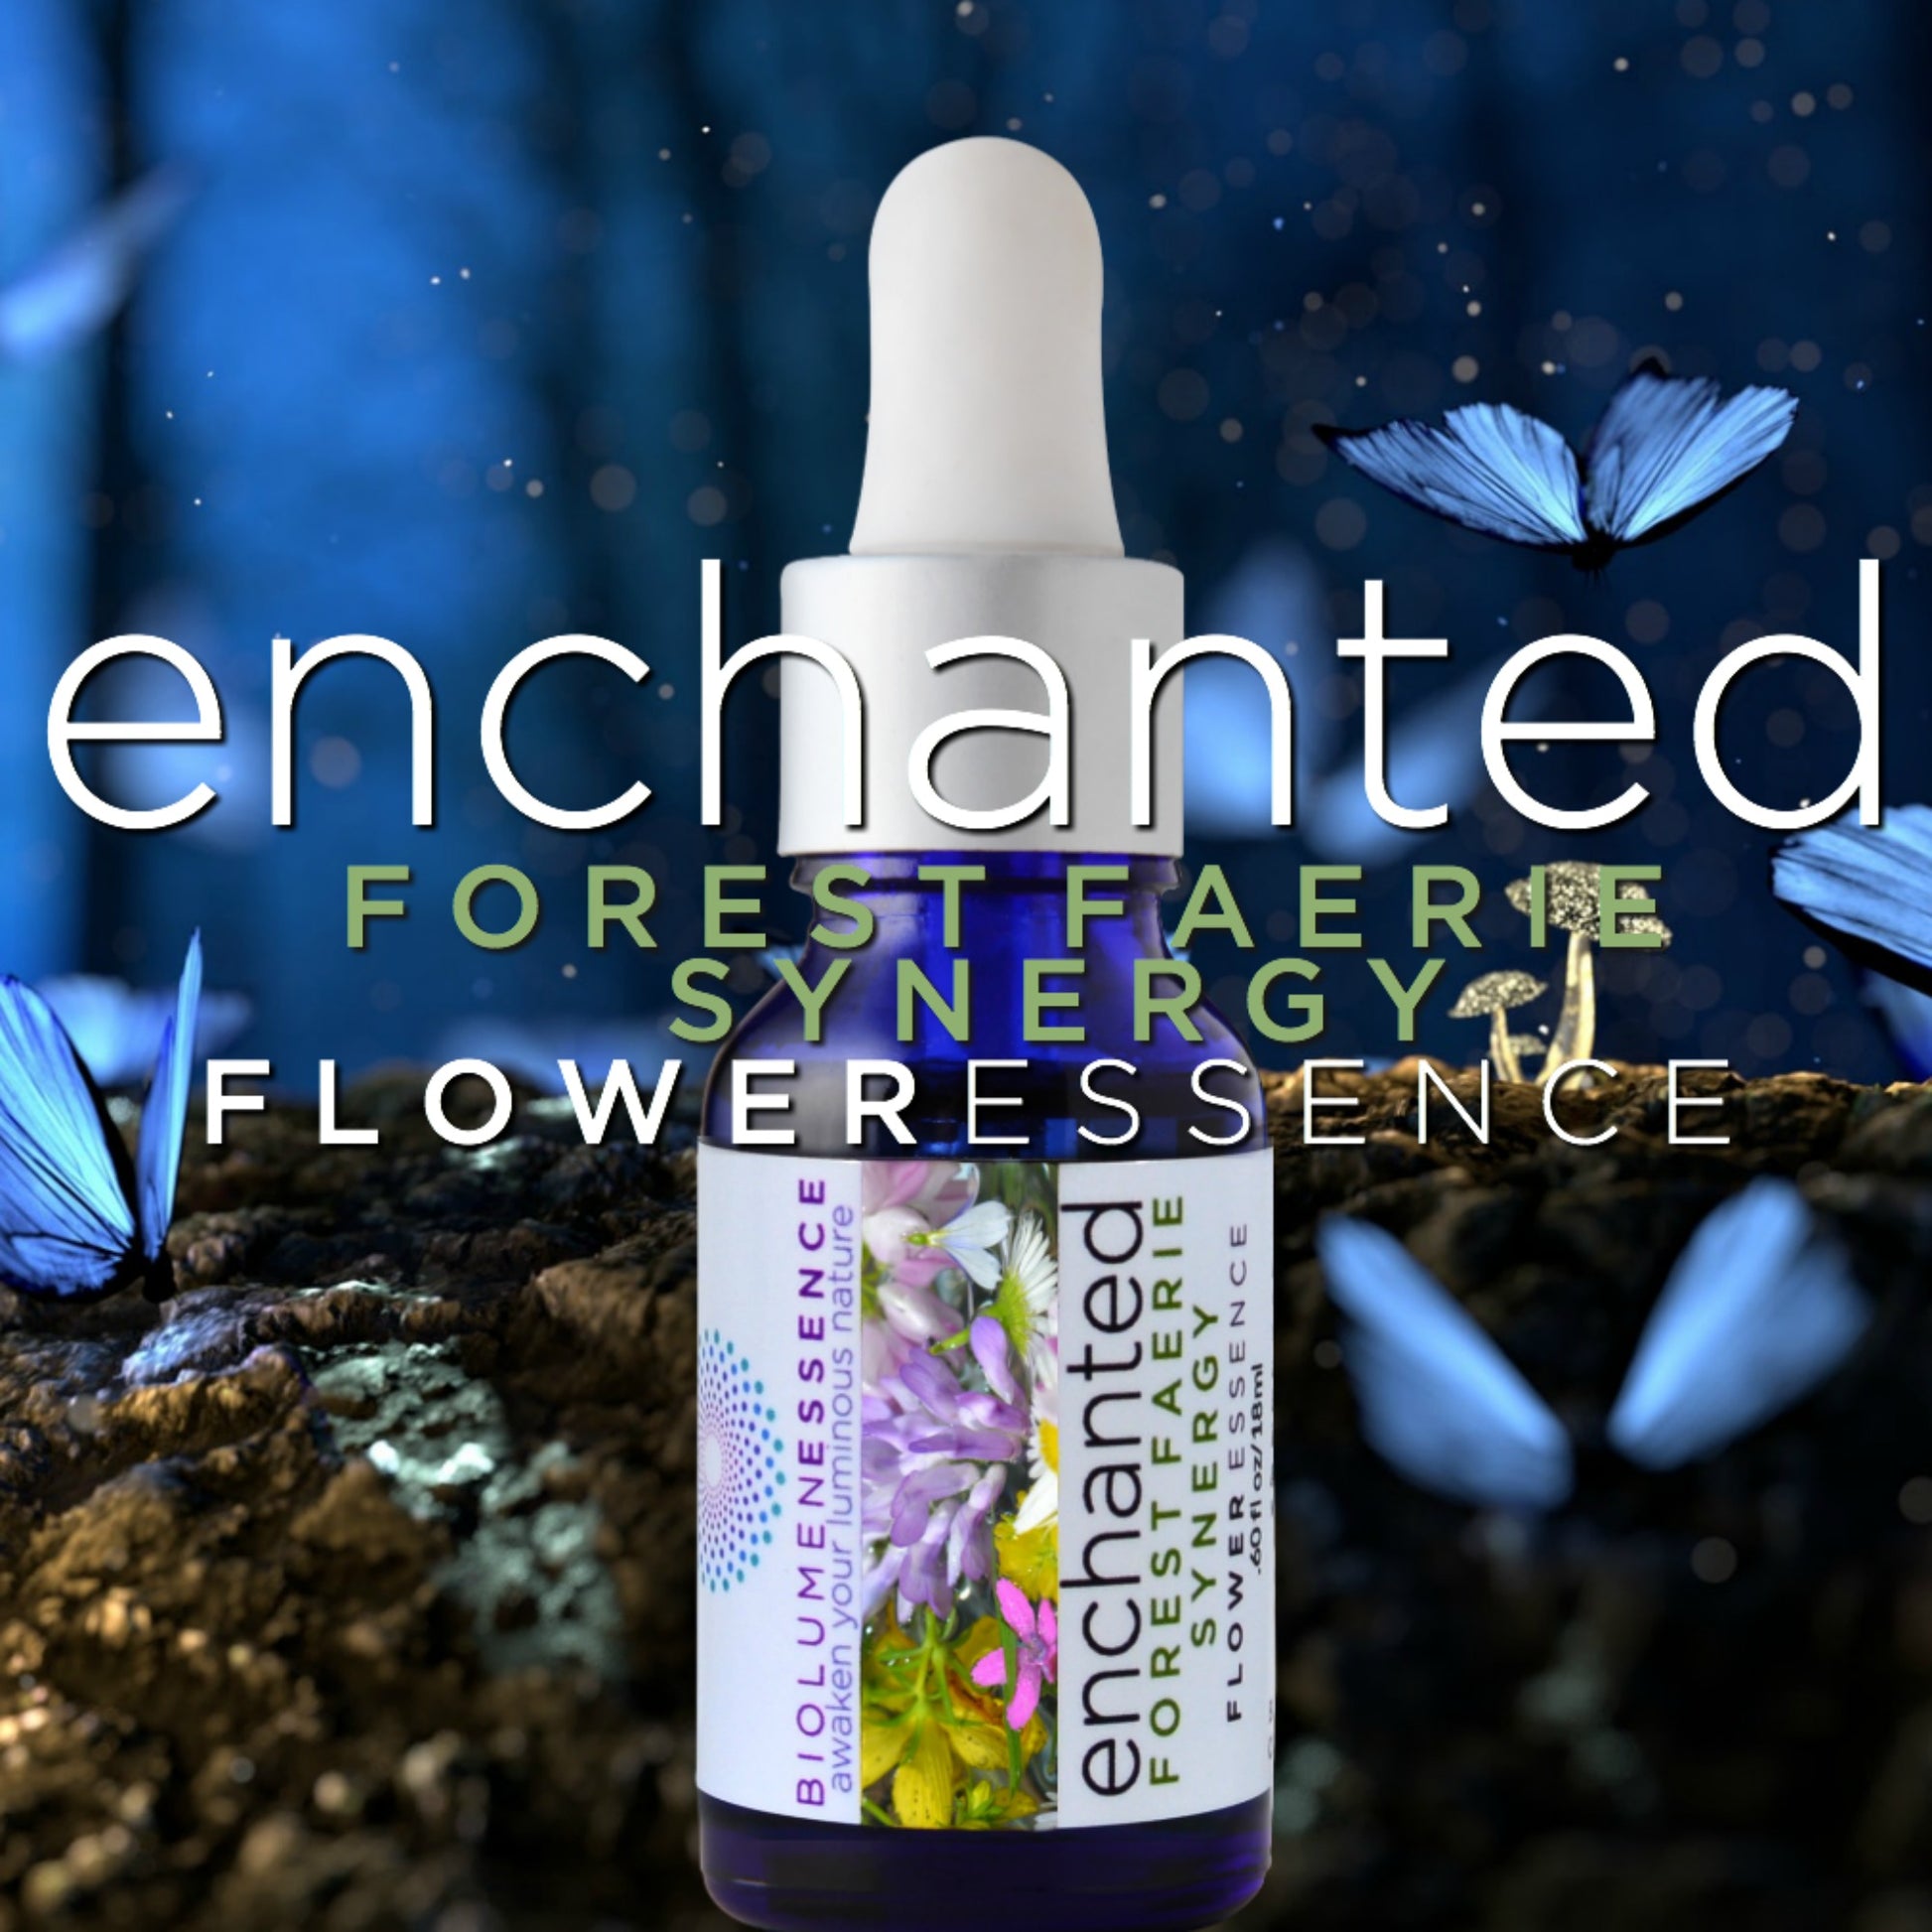 Enchanted Forest Faerie Flower Essence